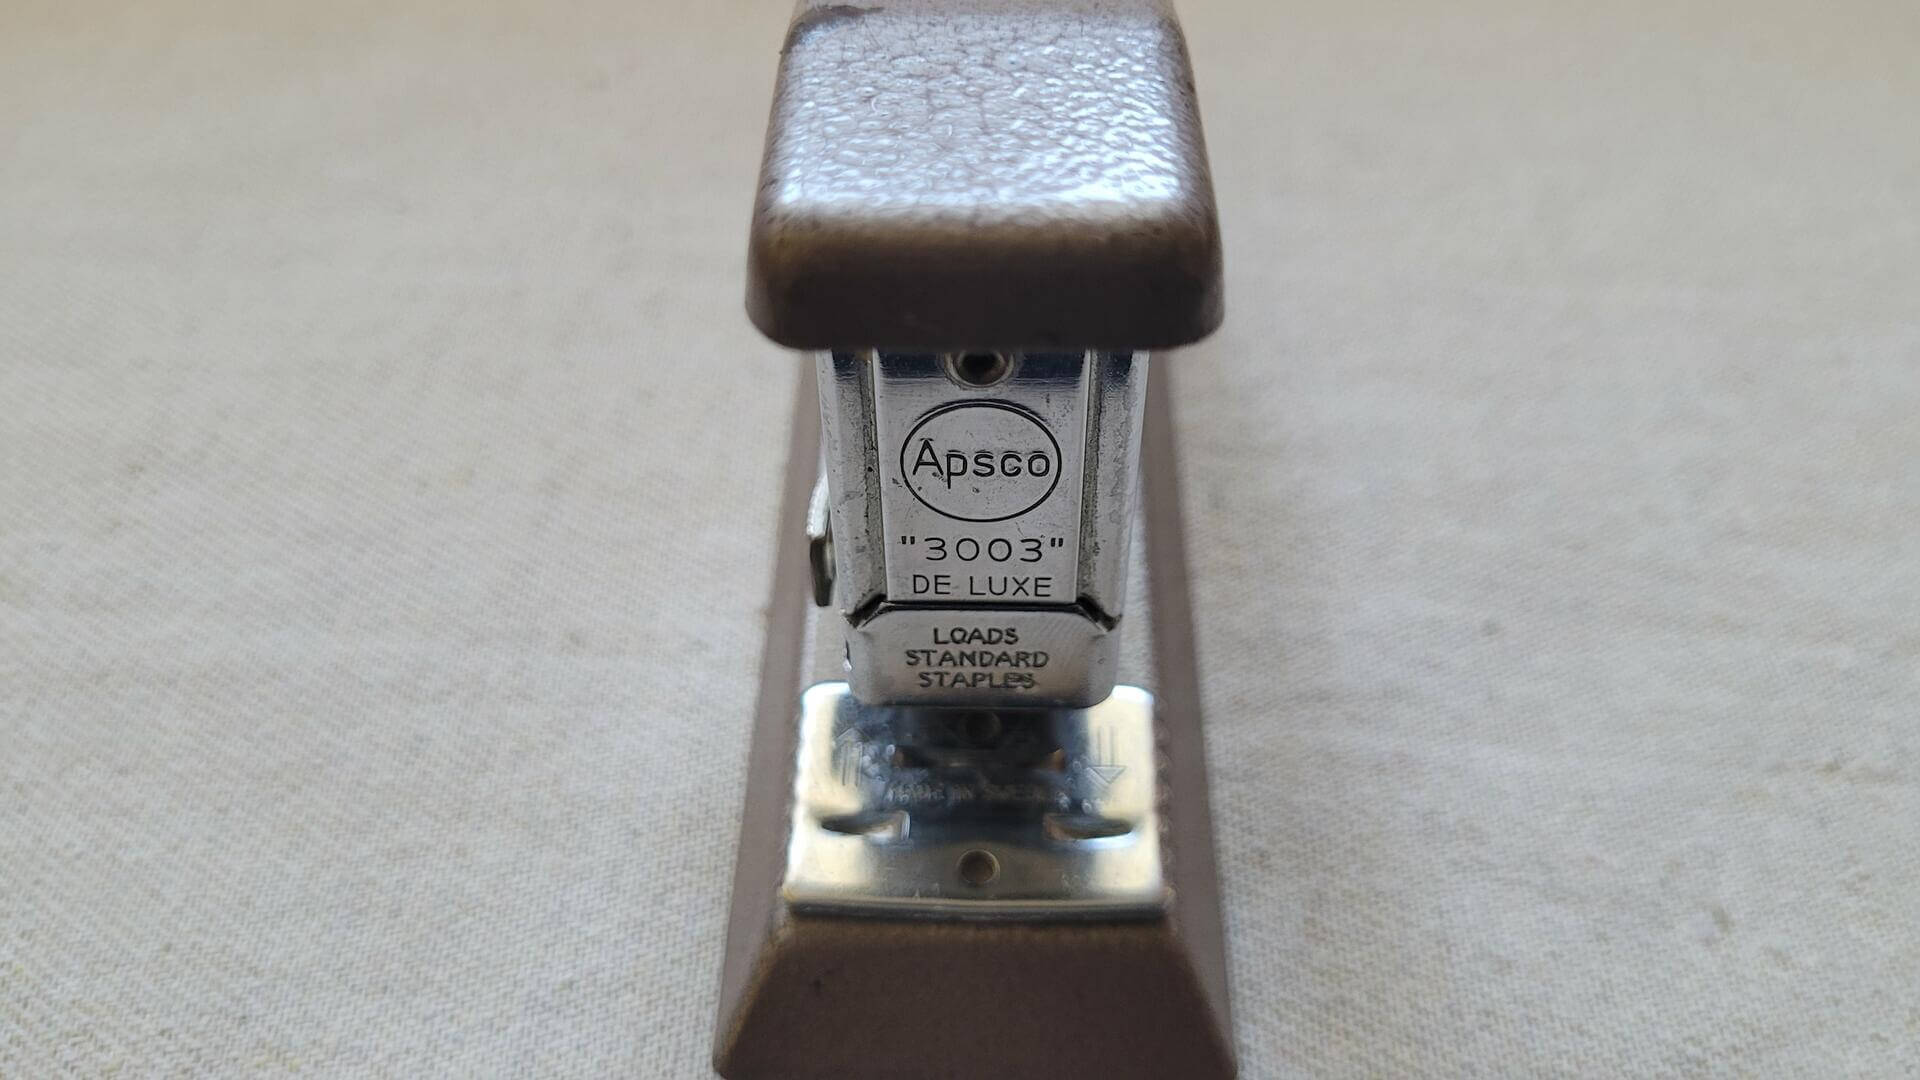 apsco-3003-de-luxe-paper-stapler-isaberg-ab-hestra-design-vintage-antique-made-in-sweden-mid-century-collectible-office-equipment-model-brand-engraving